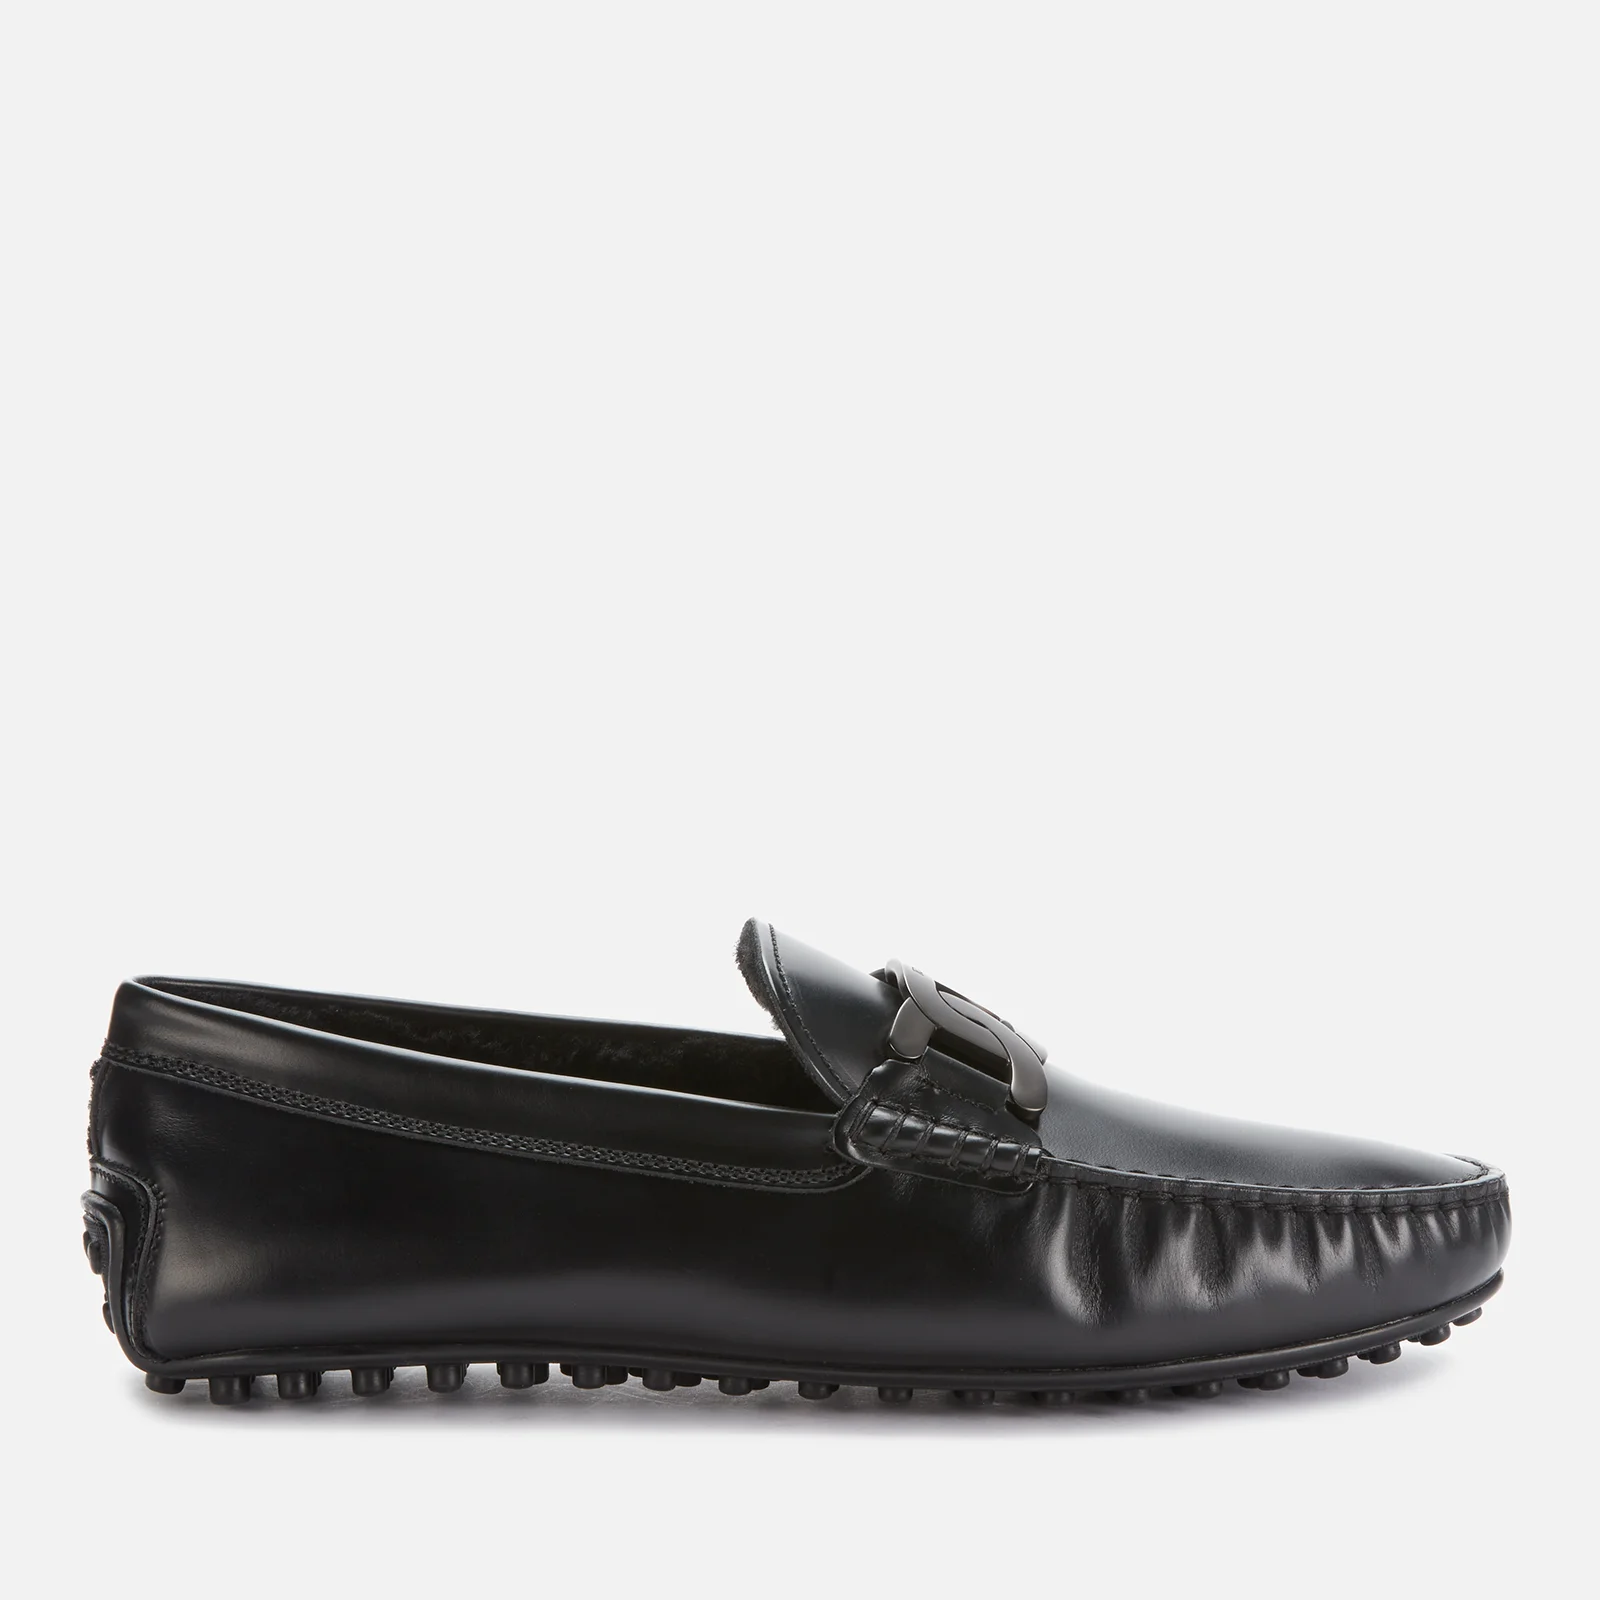 Tod's Men's Gommini Leather Driving Shoes - Black Image 1